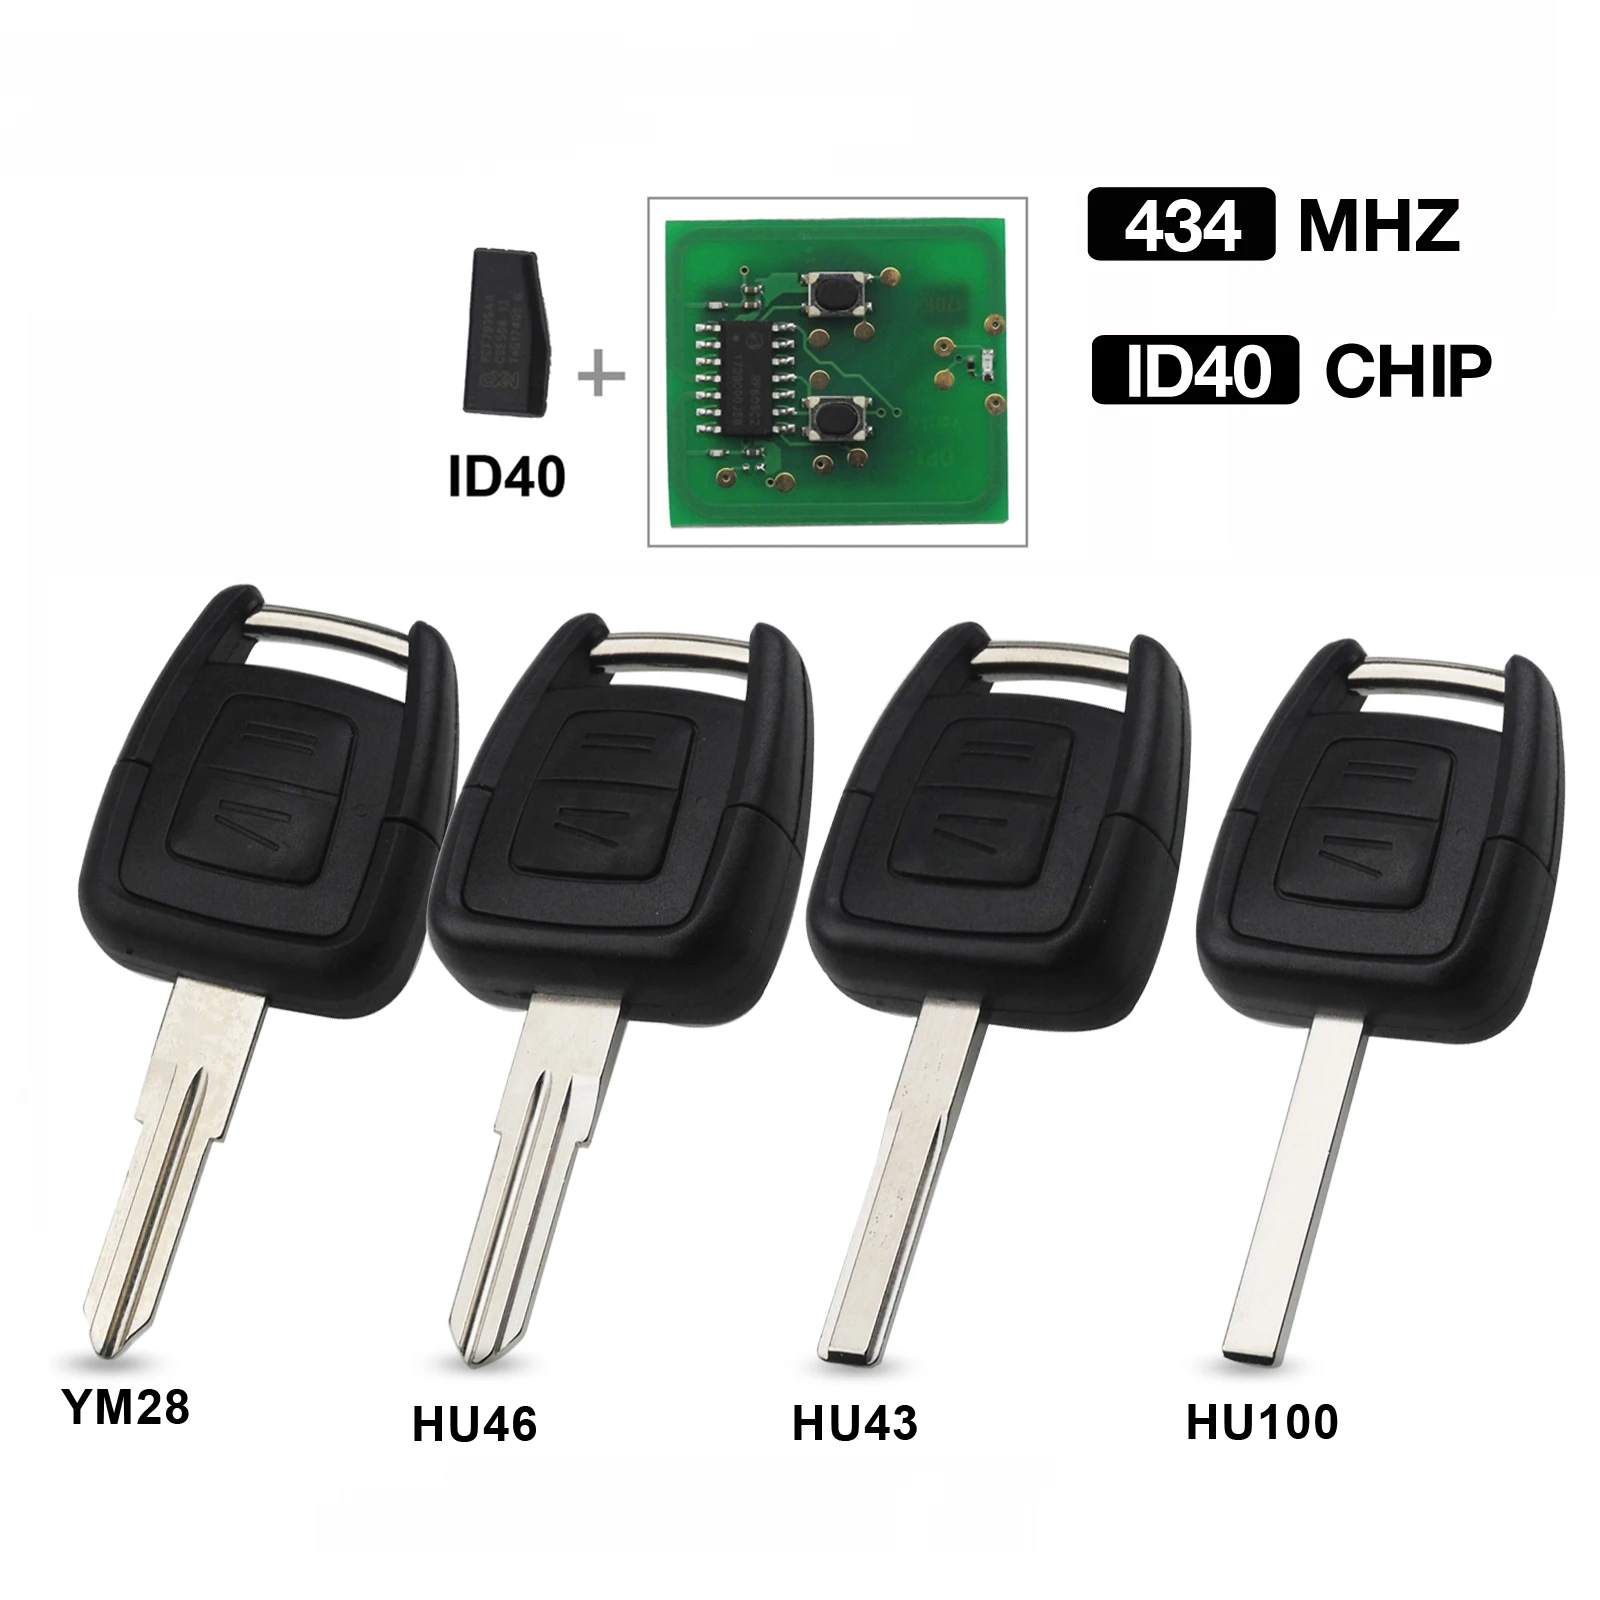 jingyuqin 2 BTN 433Mhz ID40 Chip Remote Key For Opel Vauxhall Vectra Zafira OP1 24424723 With HU43 HU100 YM28 HU46 Blank Blade